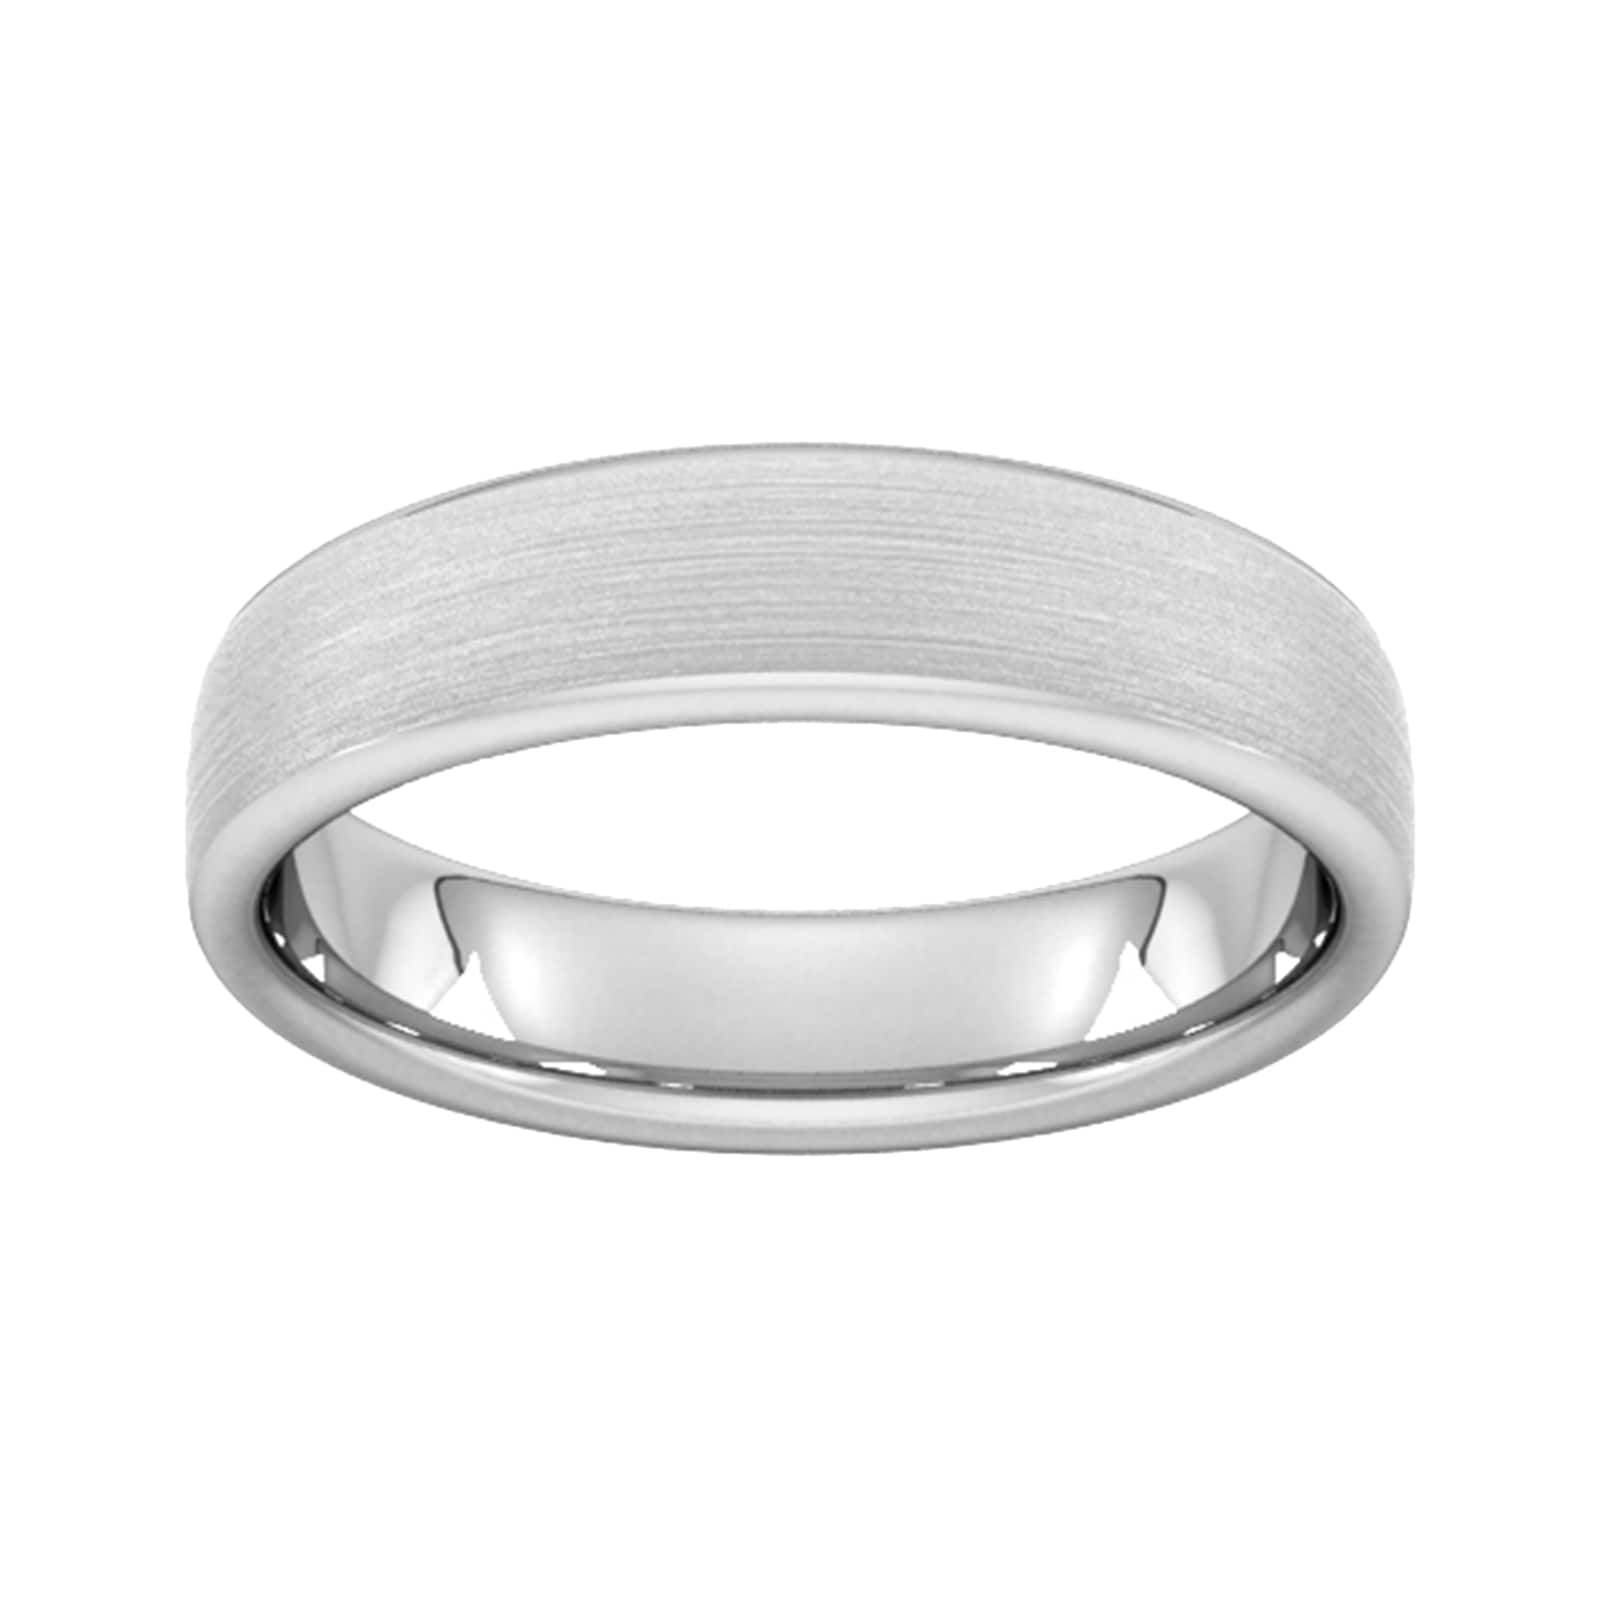 5mm Slight Court Heavy Matt Finished Wedding Ring In 18 Carat White Gold - Ring Size U